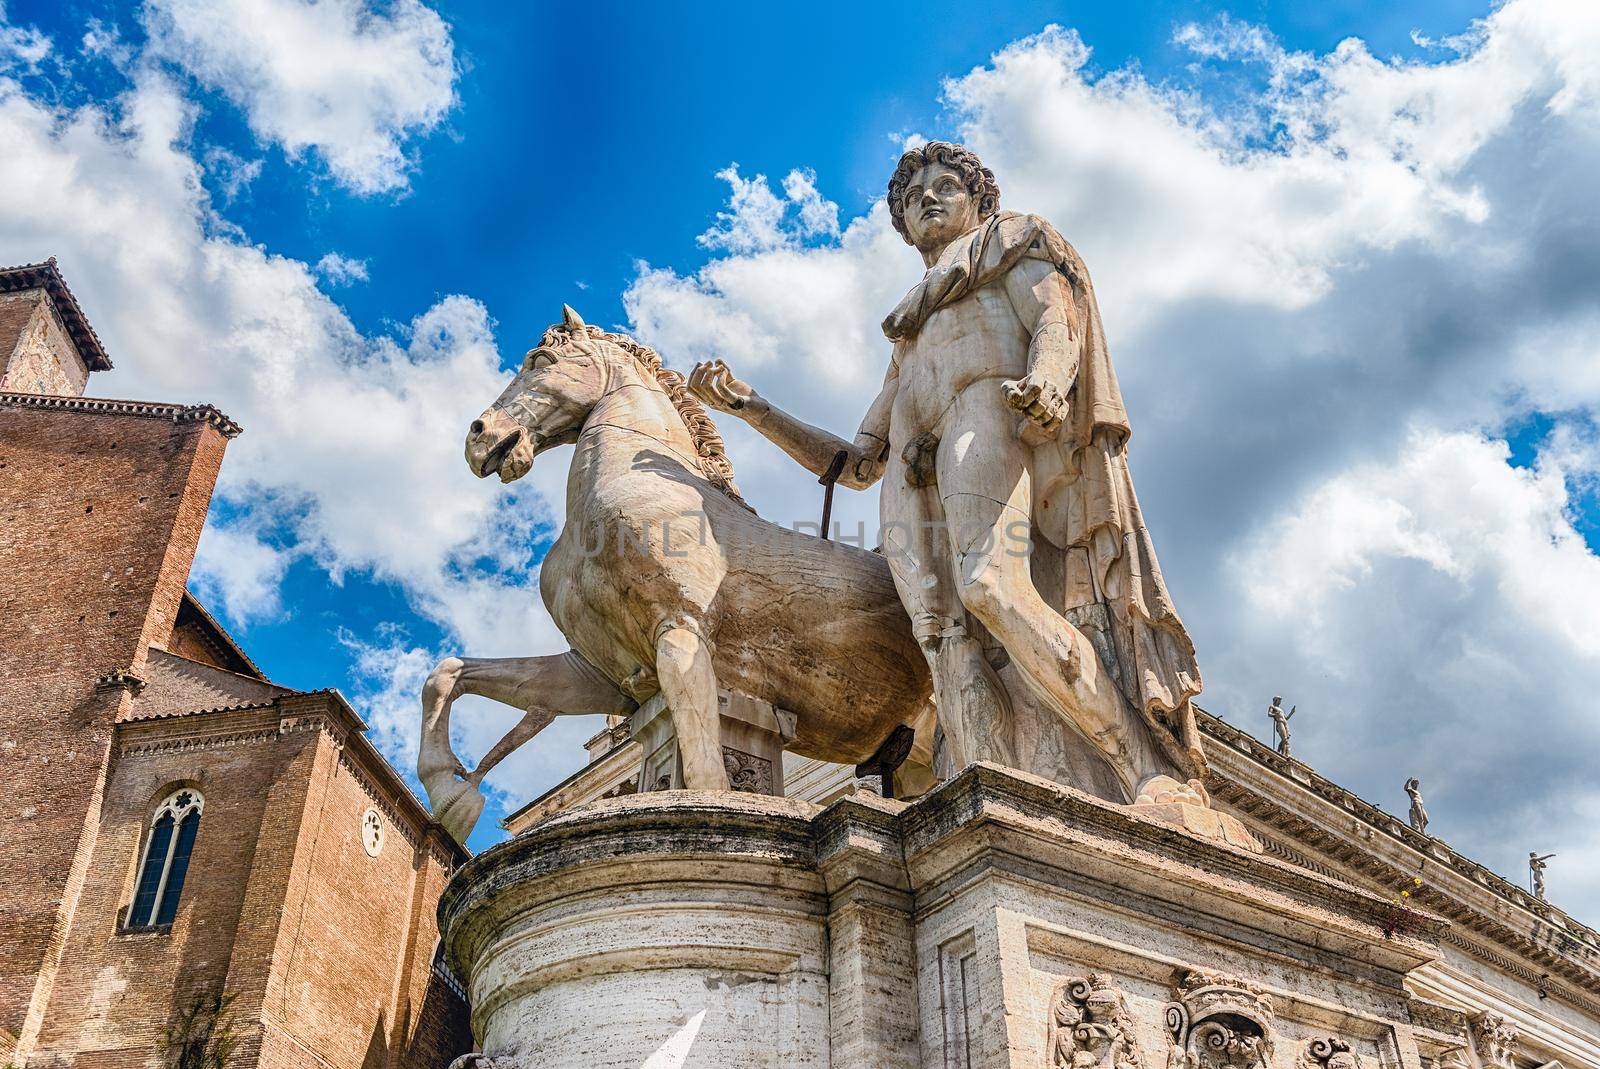 Equestrian statue of Castor on Capitol. Rome, Italy by marcorubino